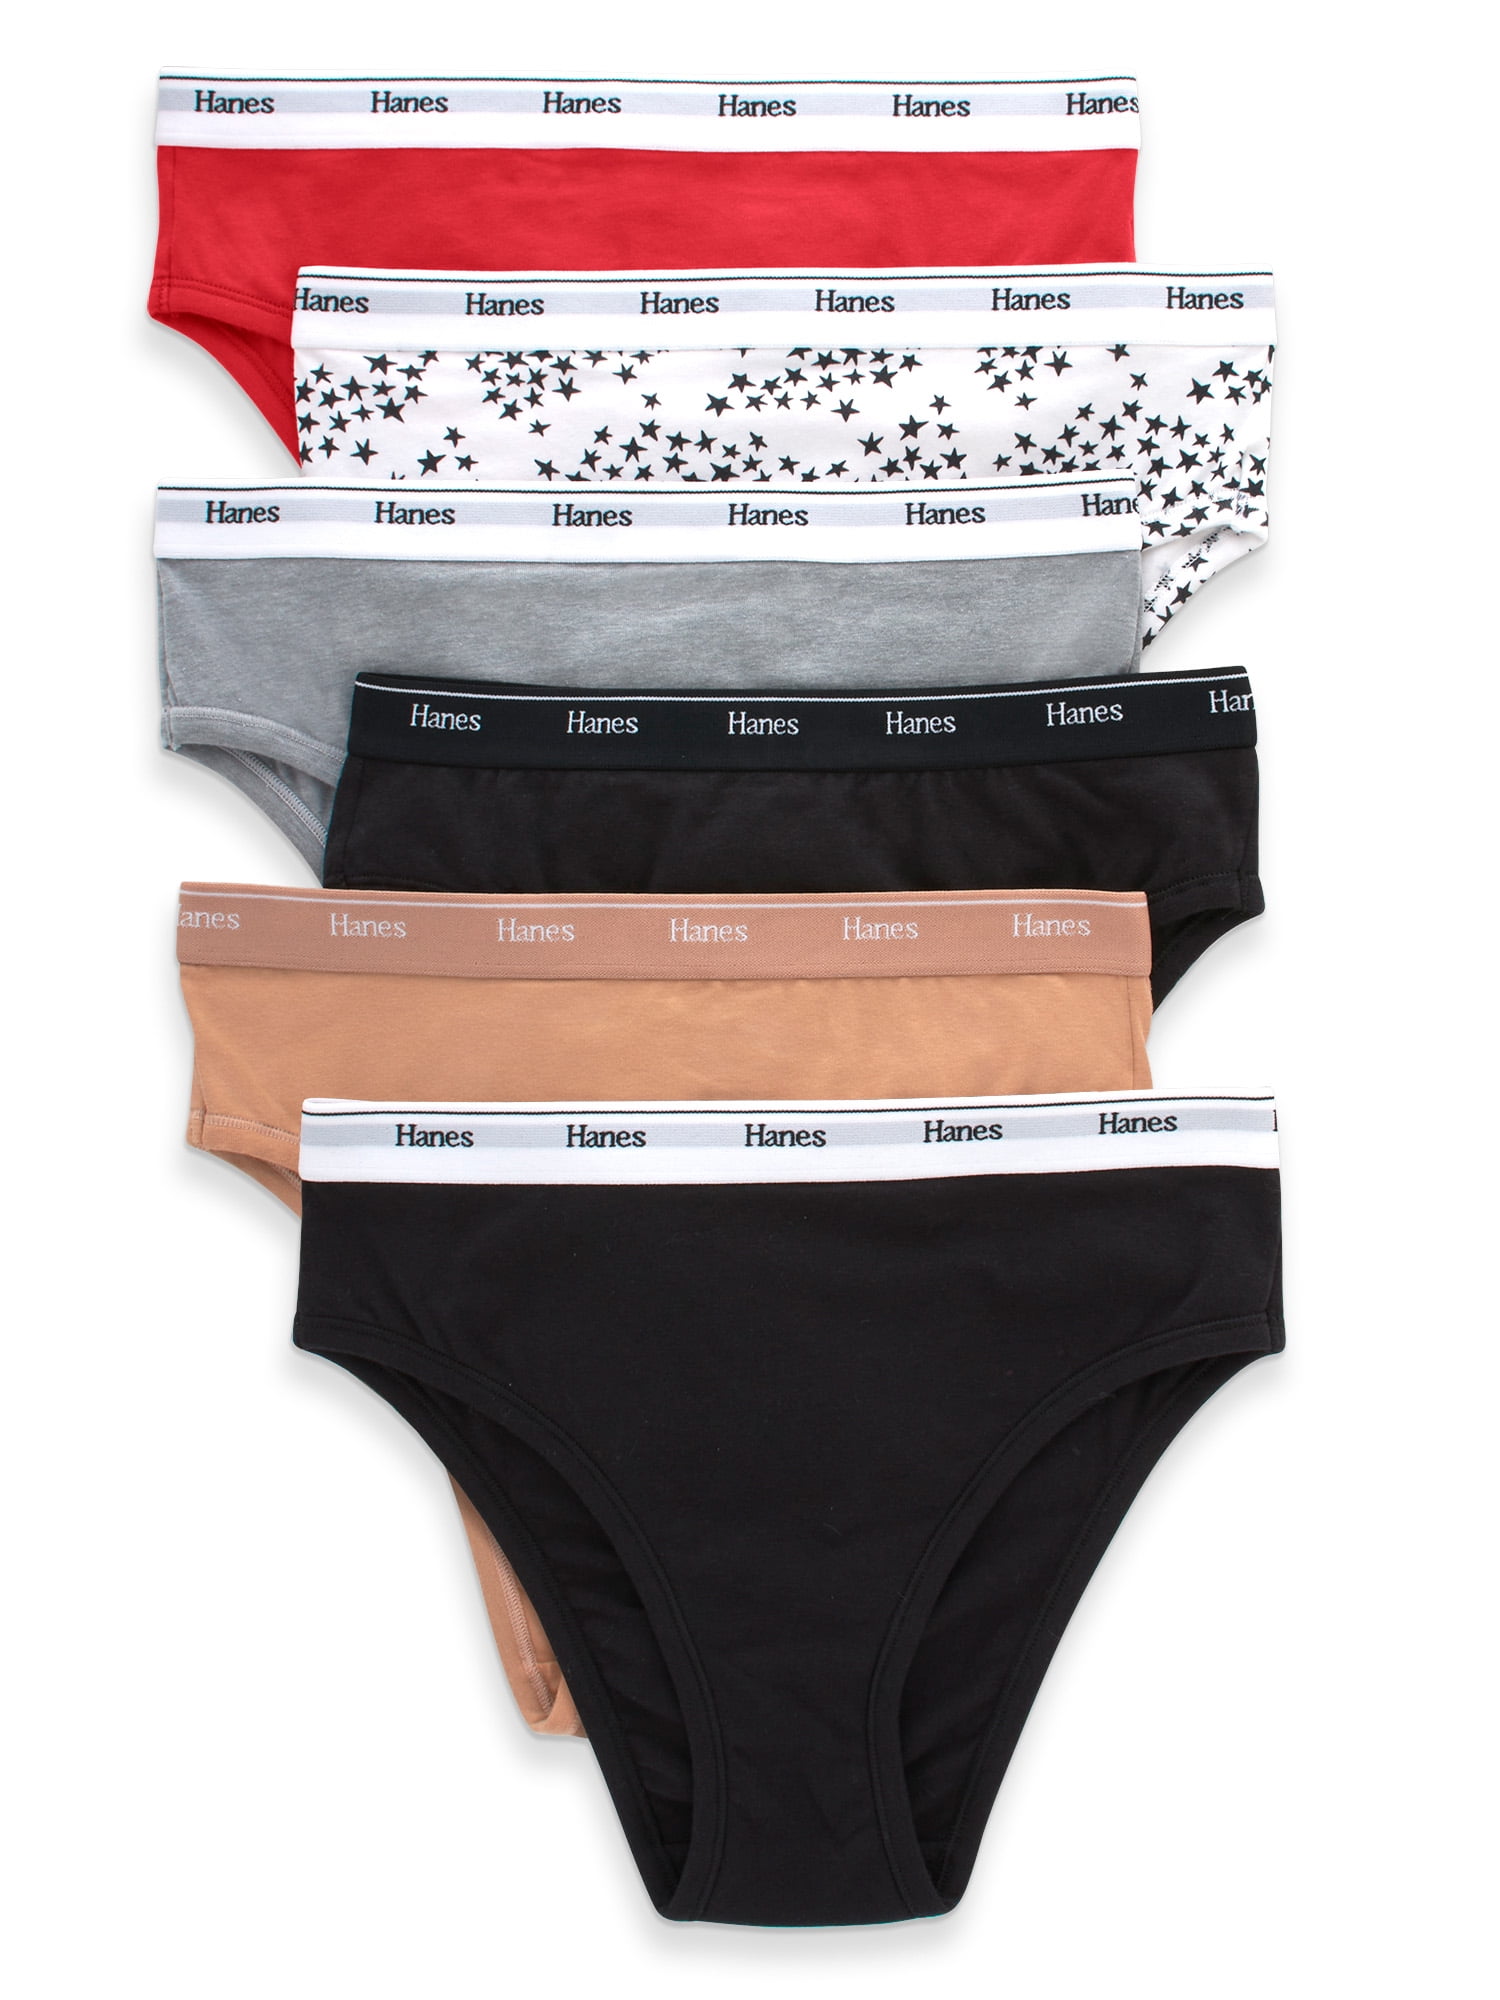 Hanes Originals Women's Hi-Leg Underwear, Breathable Cotton